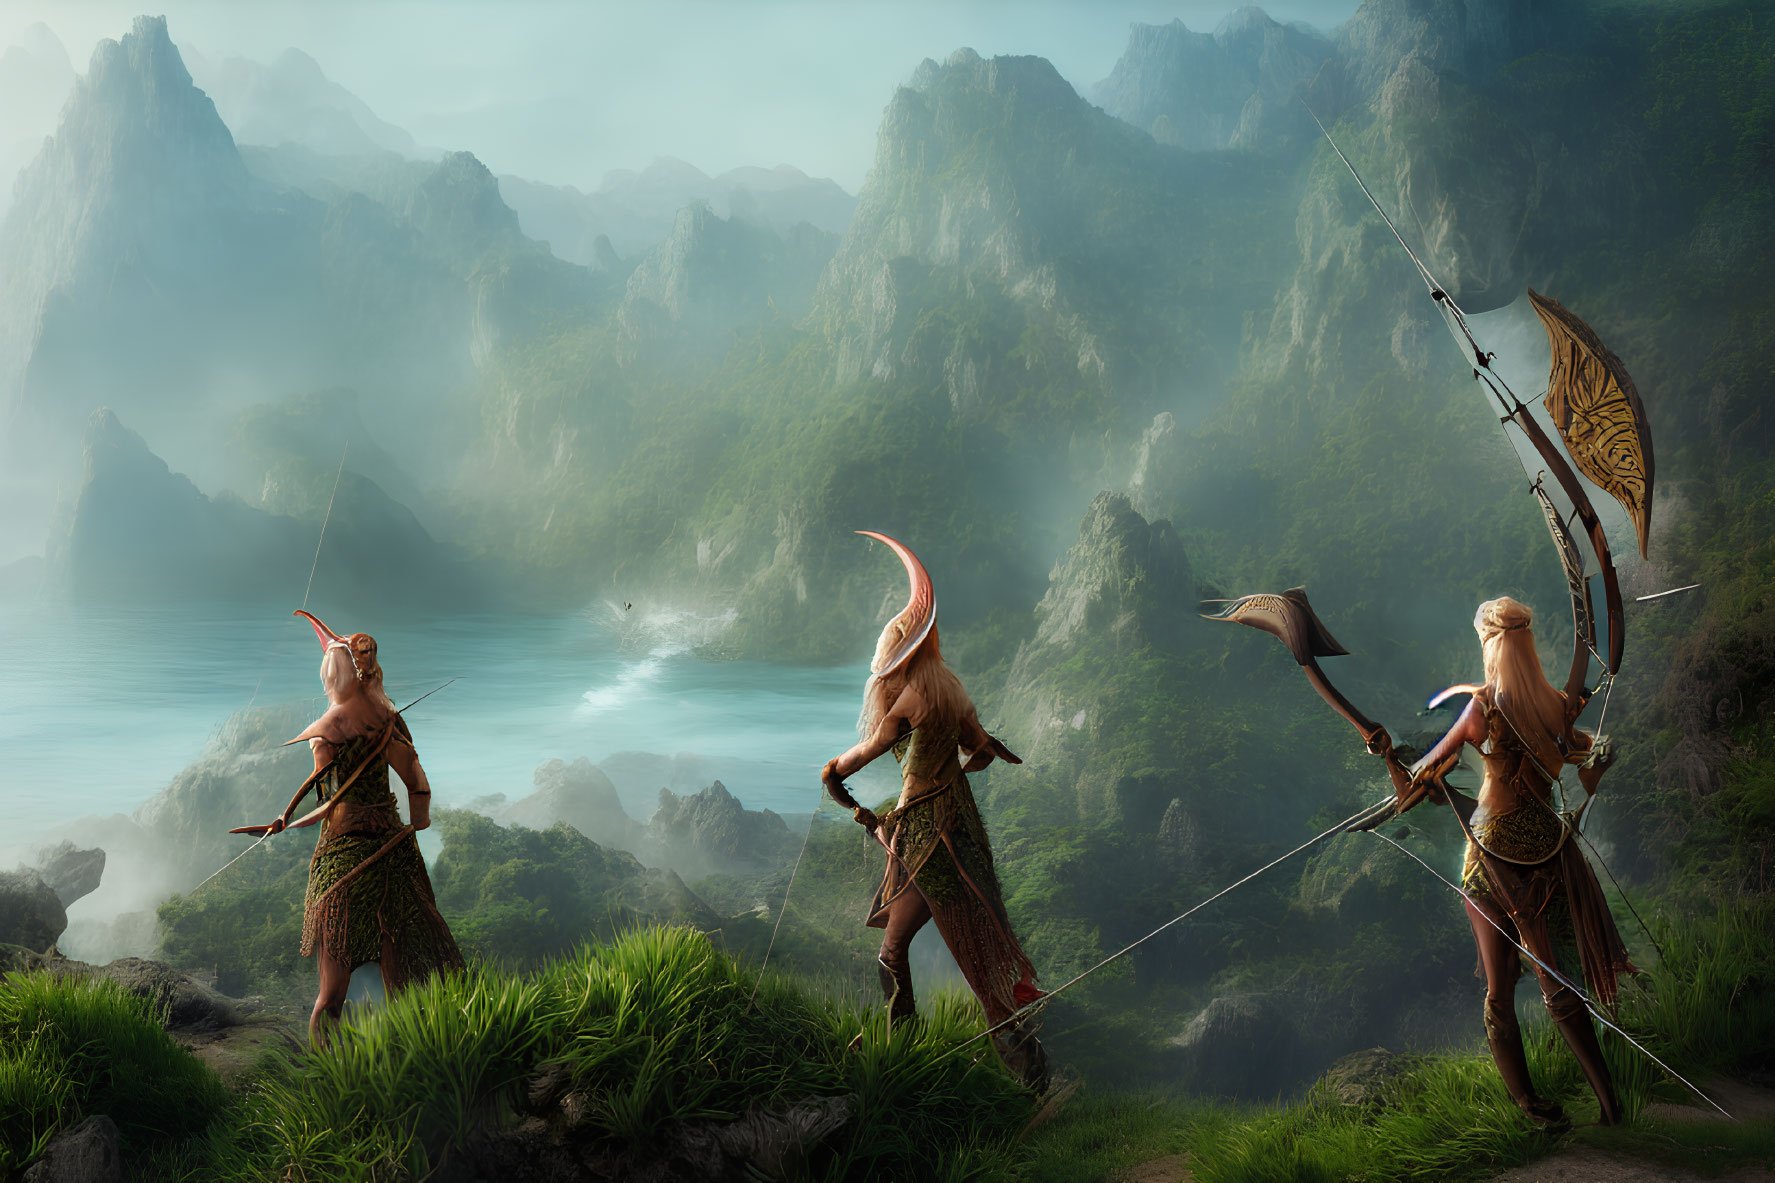 Fantasy scene: Three armed elves in misty mountain landscape by calm sea